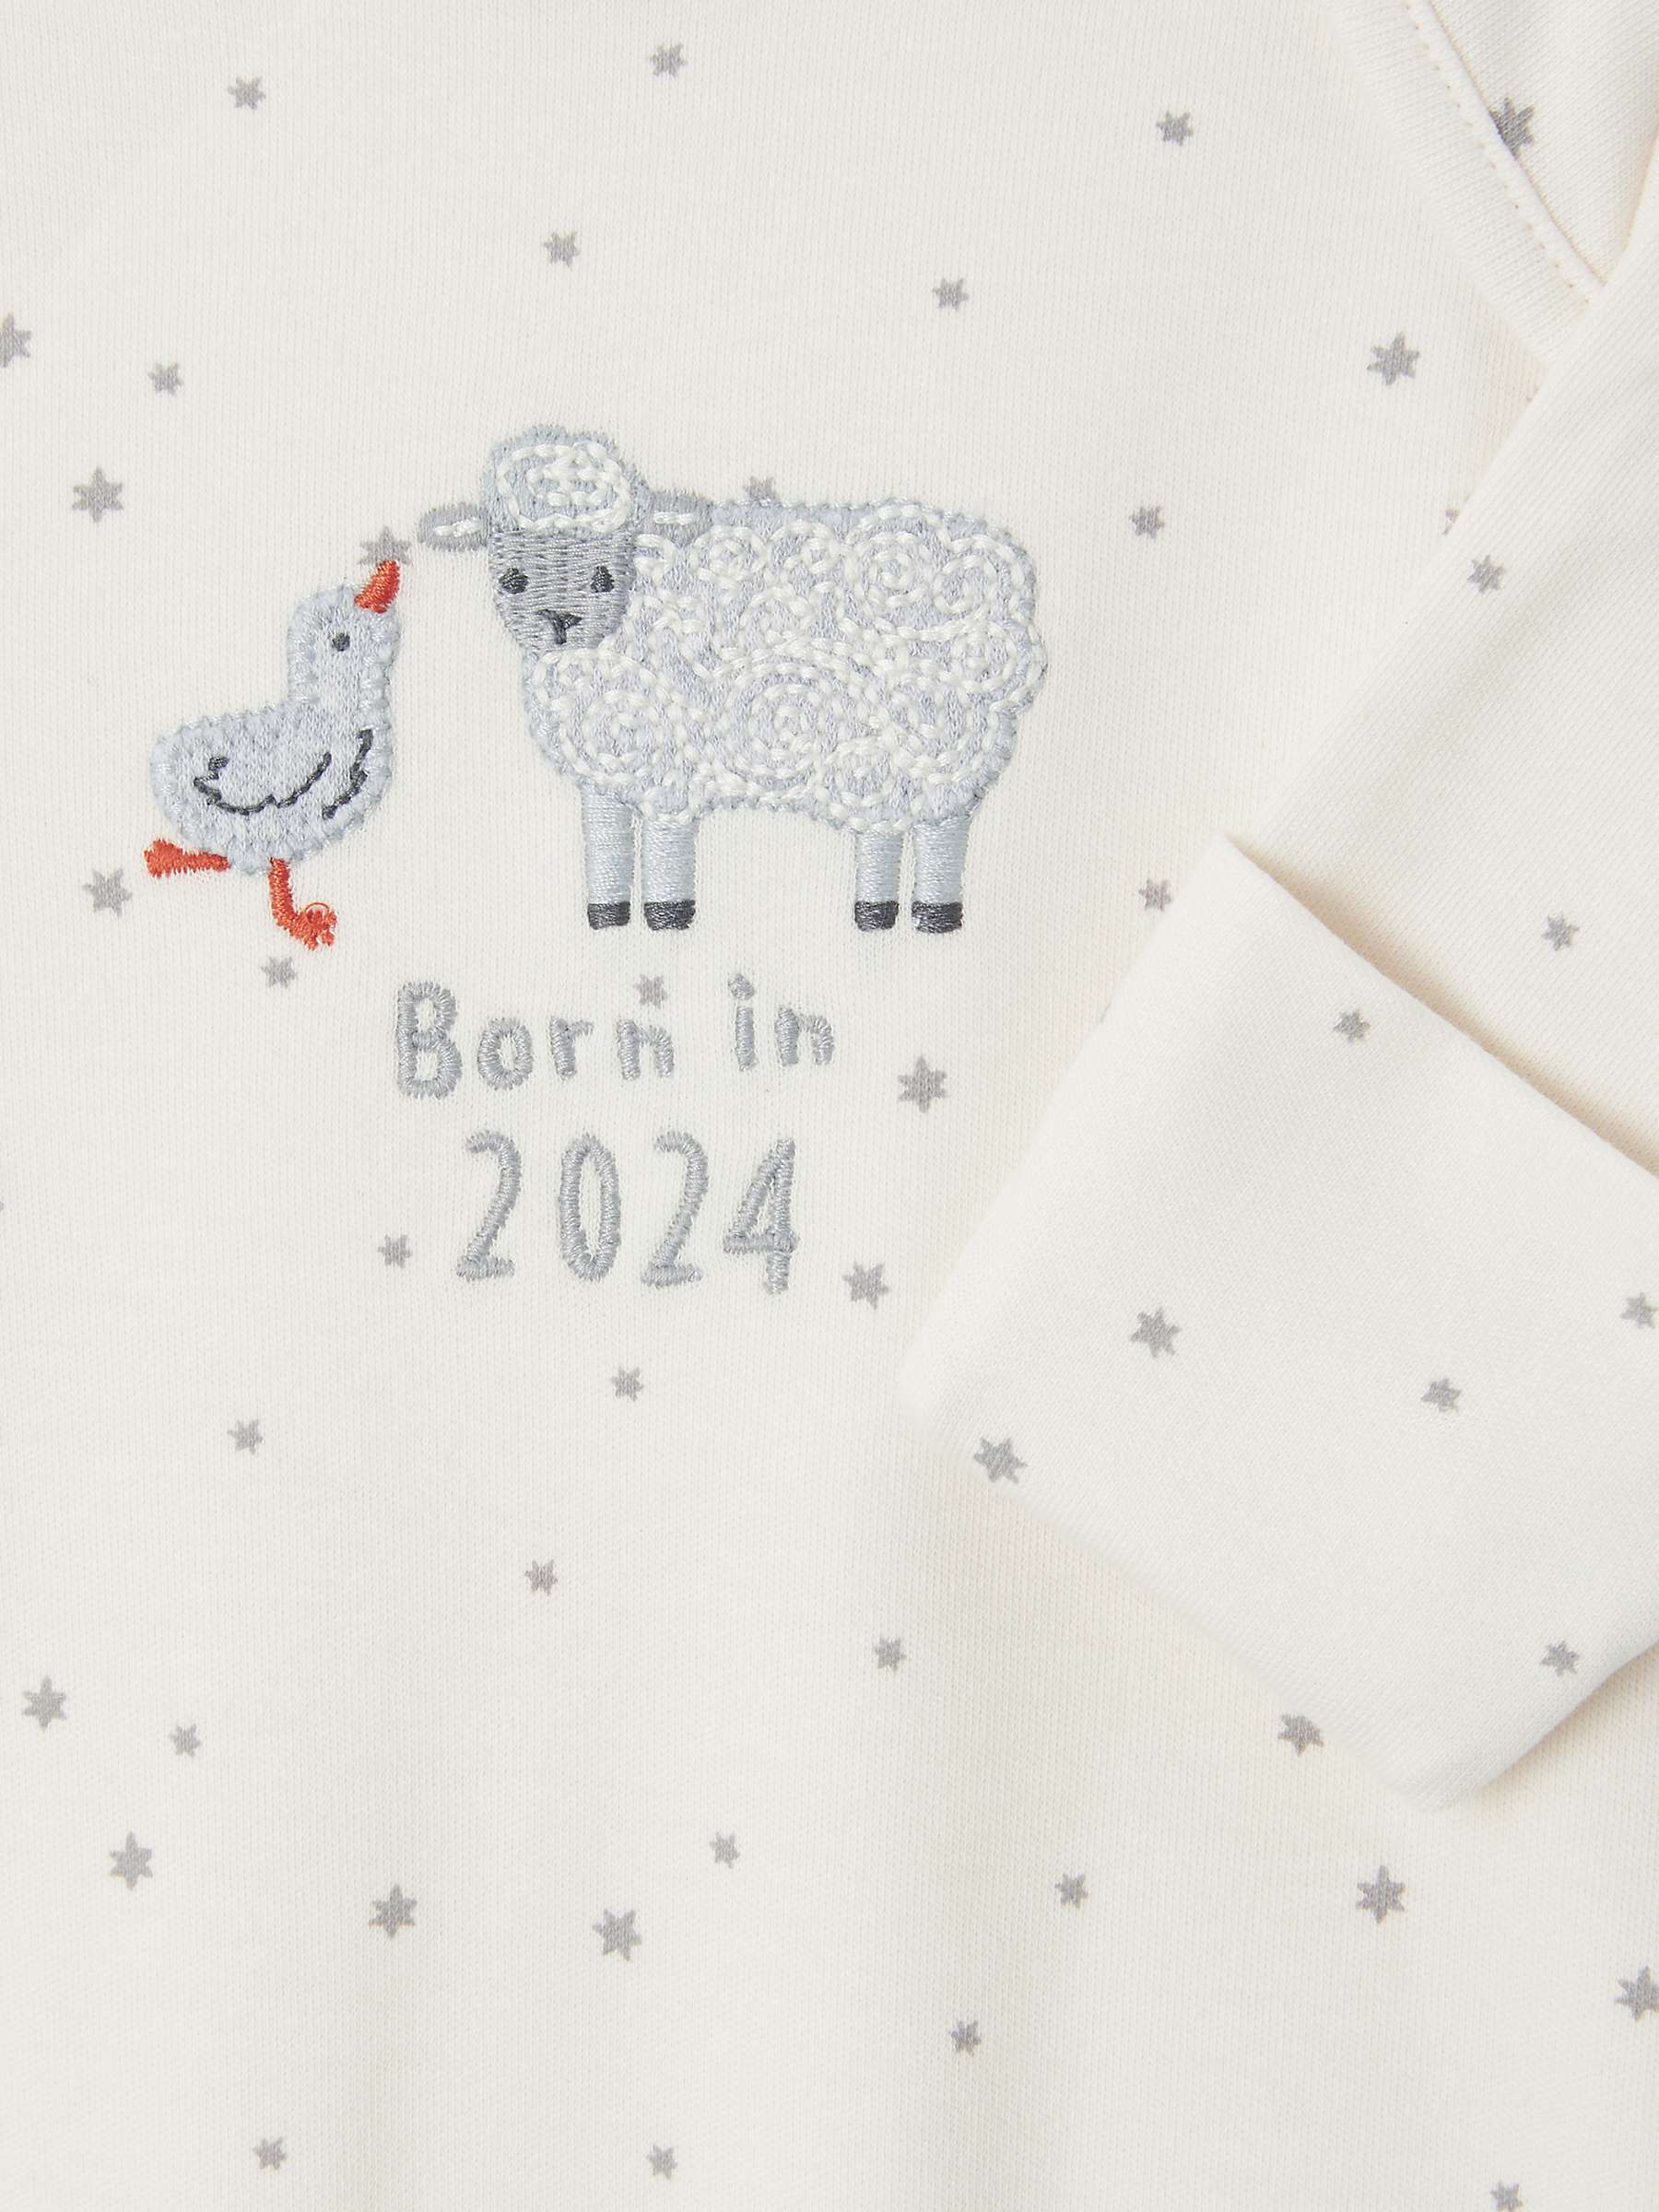 Buy John Lewis Baby Born in 2024 Star Sleepsuit, Cream Online at johnlewis.com